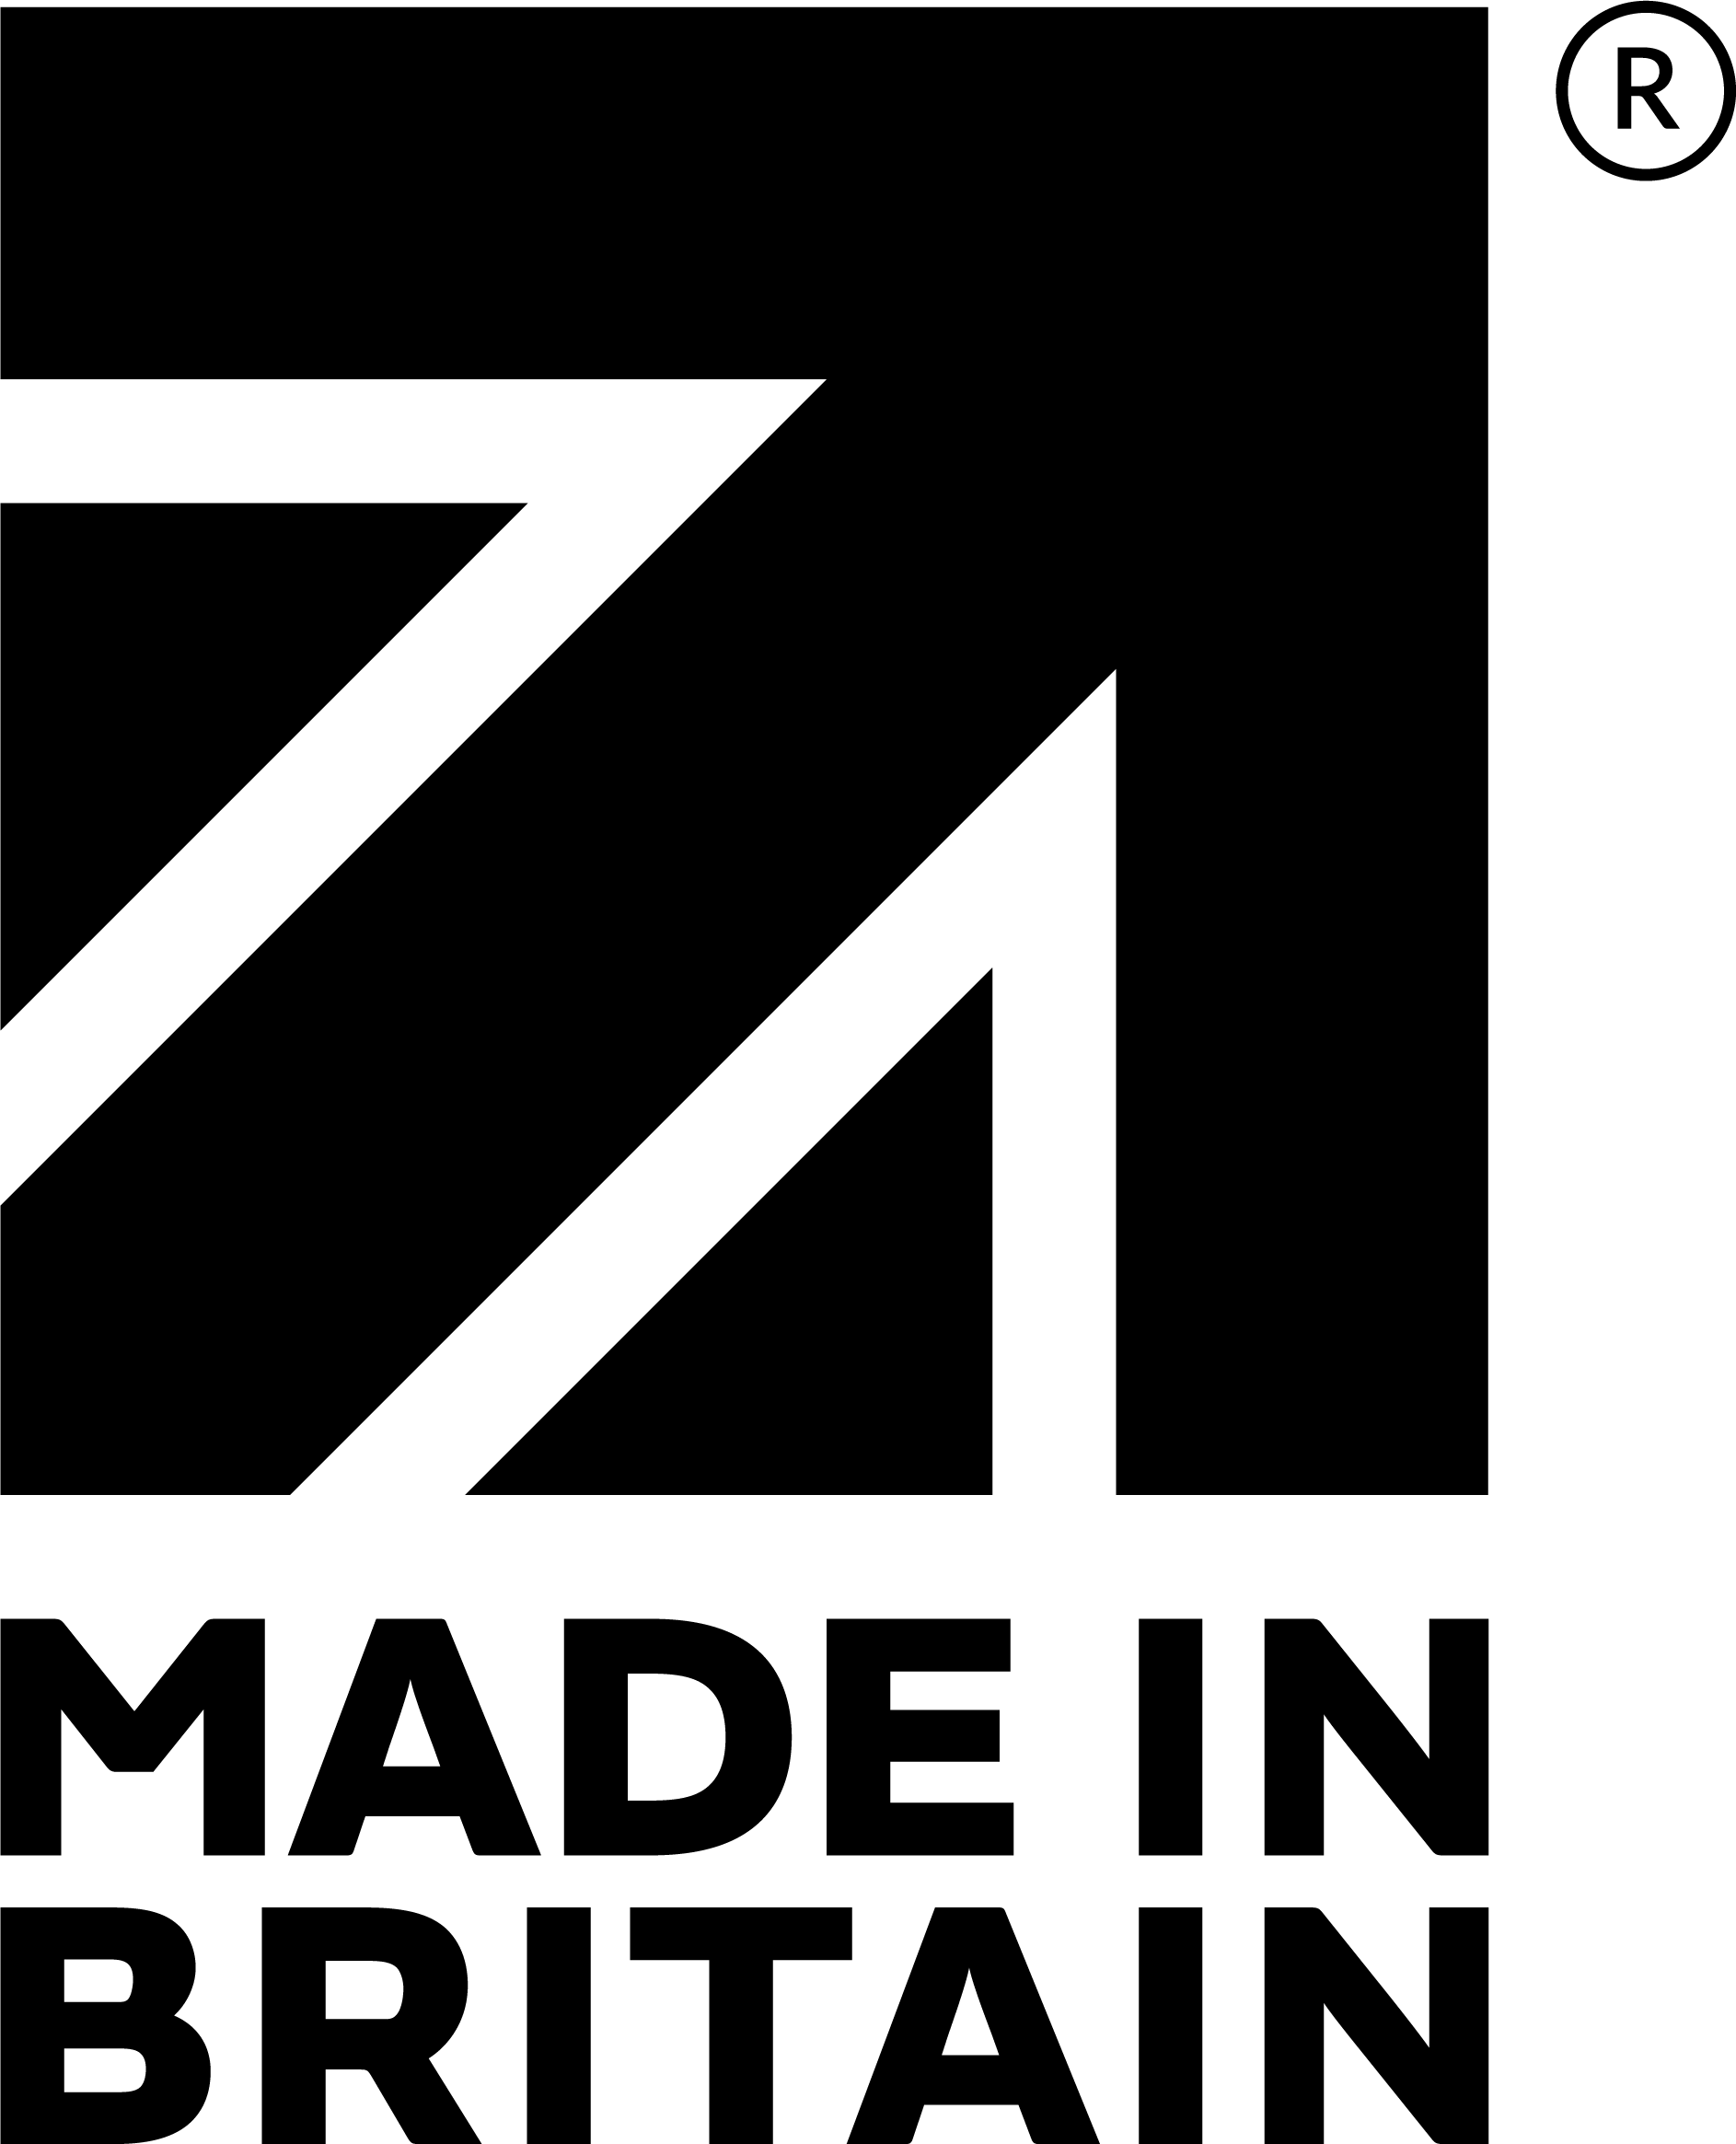 Mib logo black